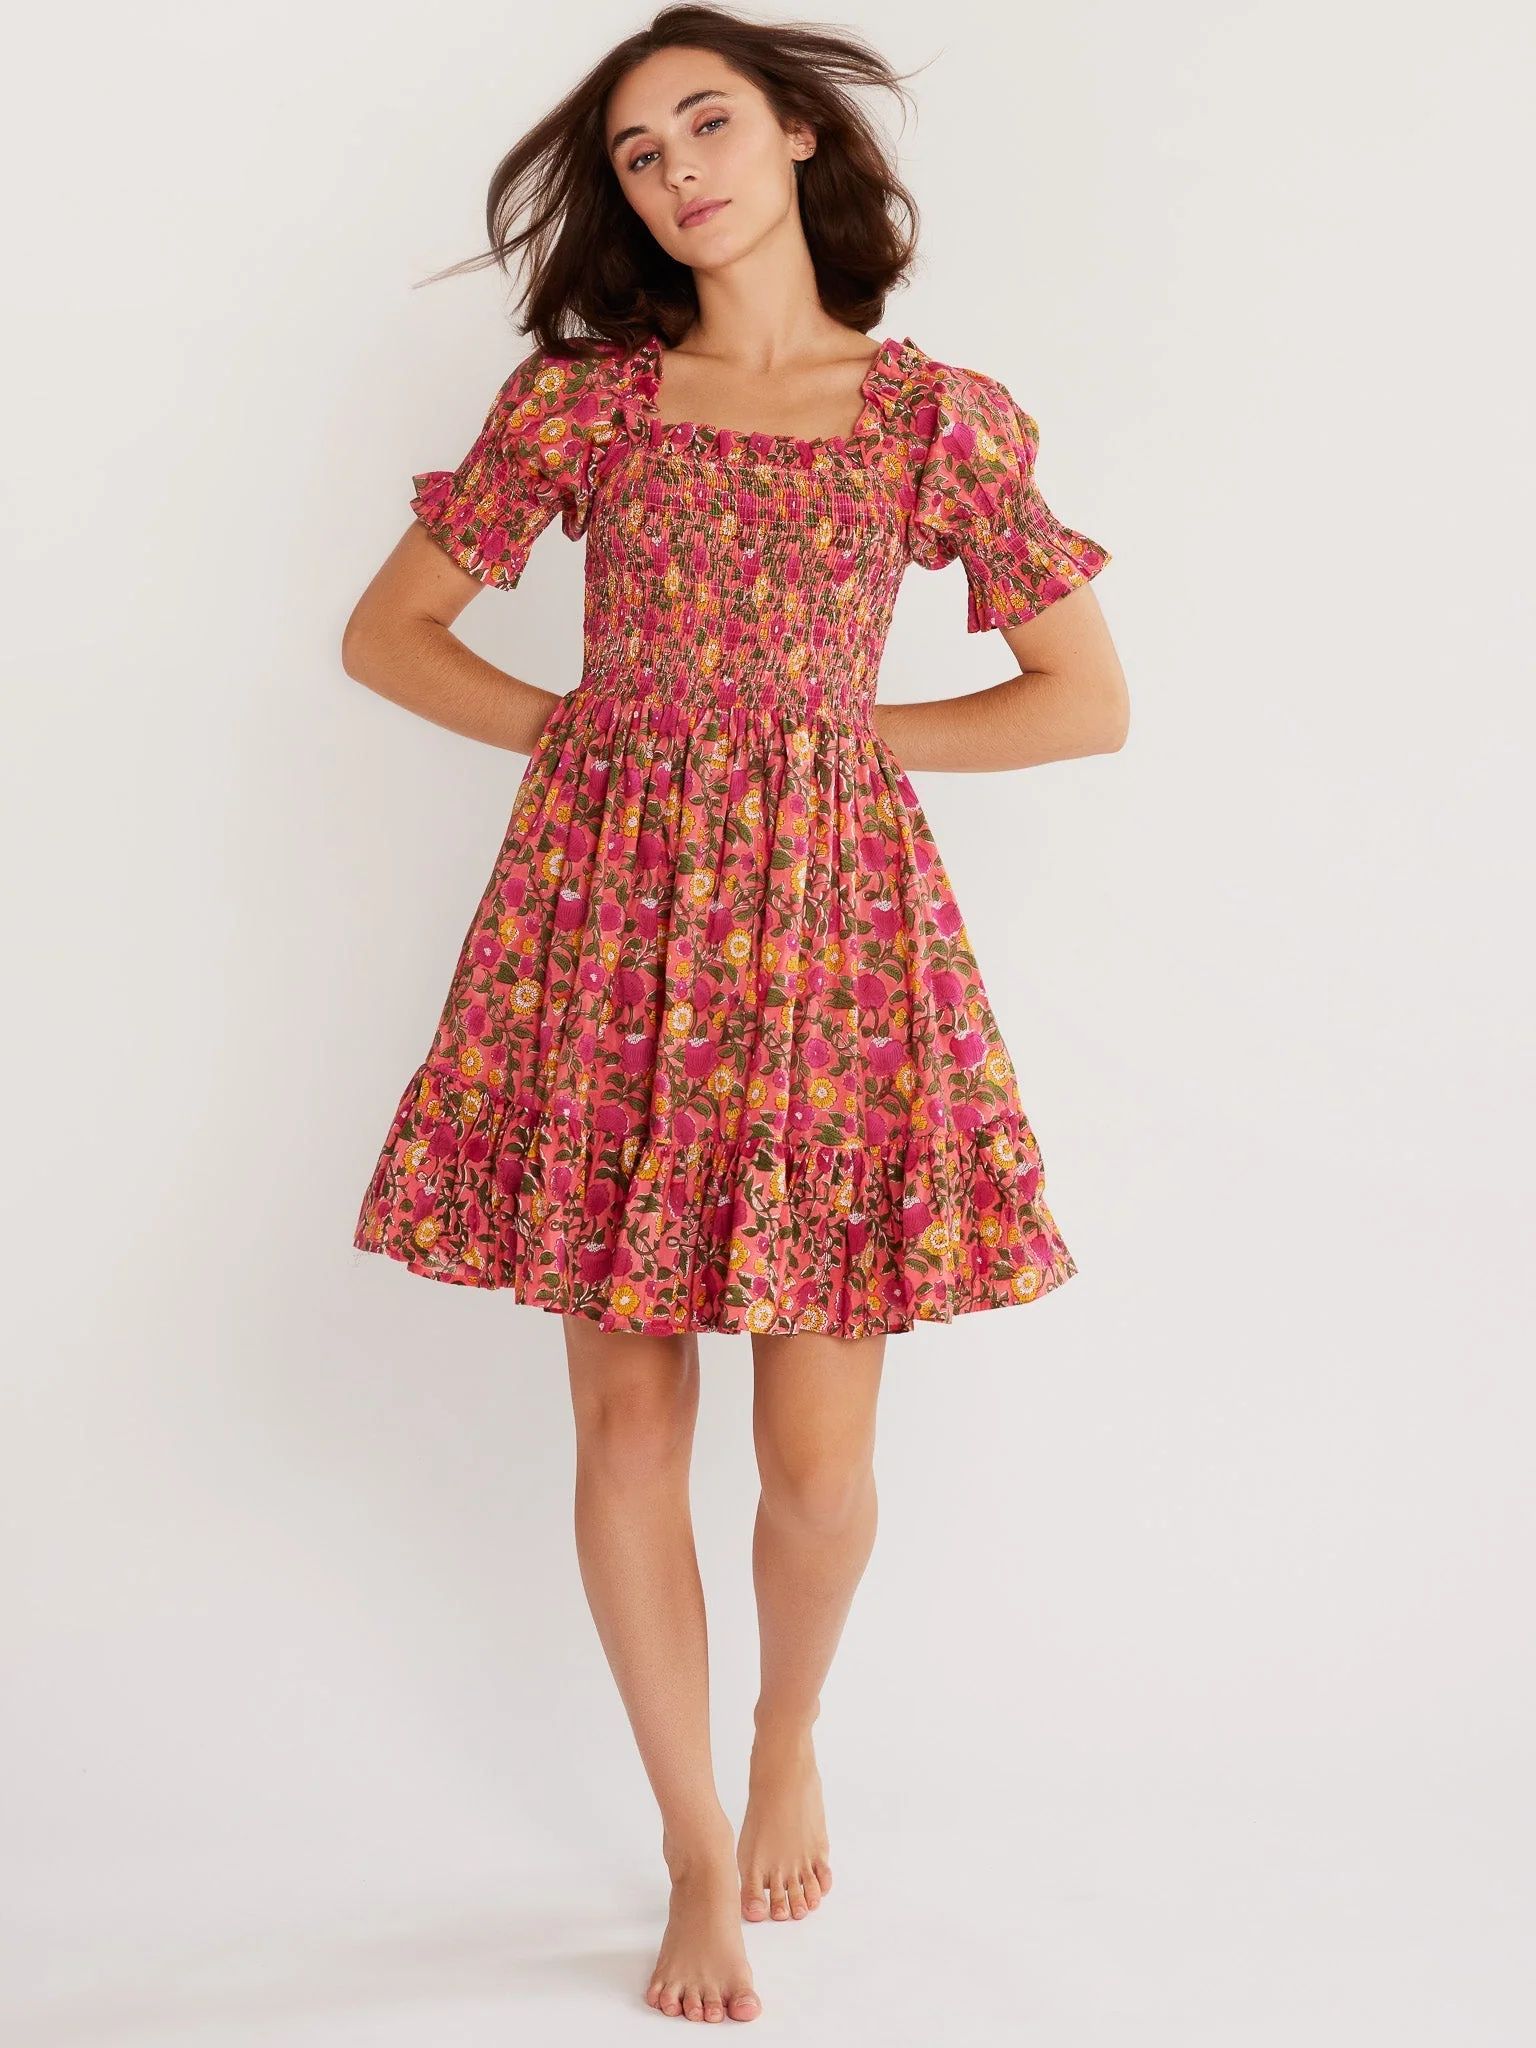 Shop Mille - Kiki Dress in Passionfruit | Mille